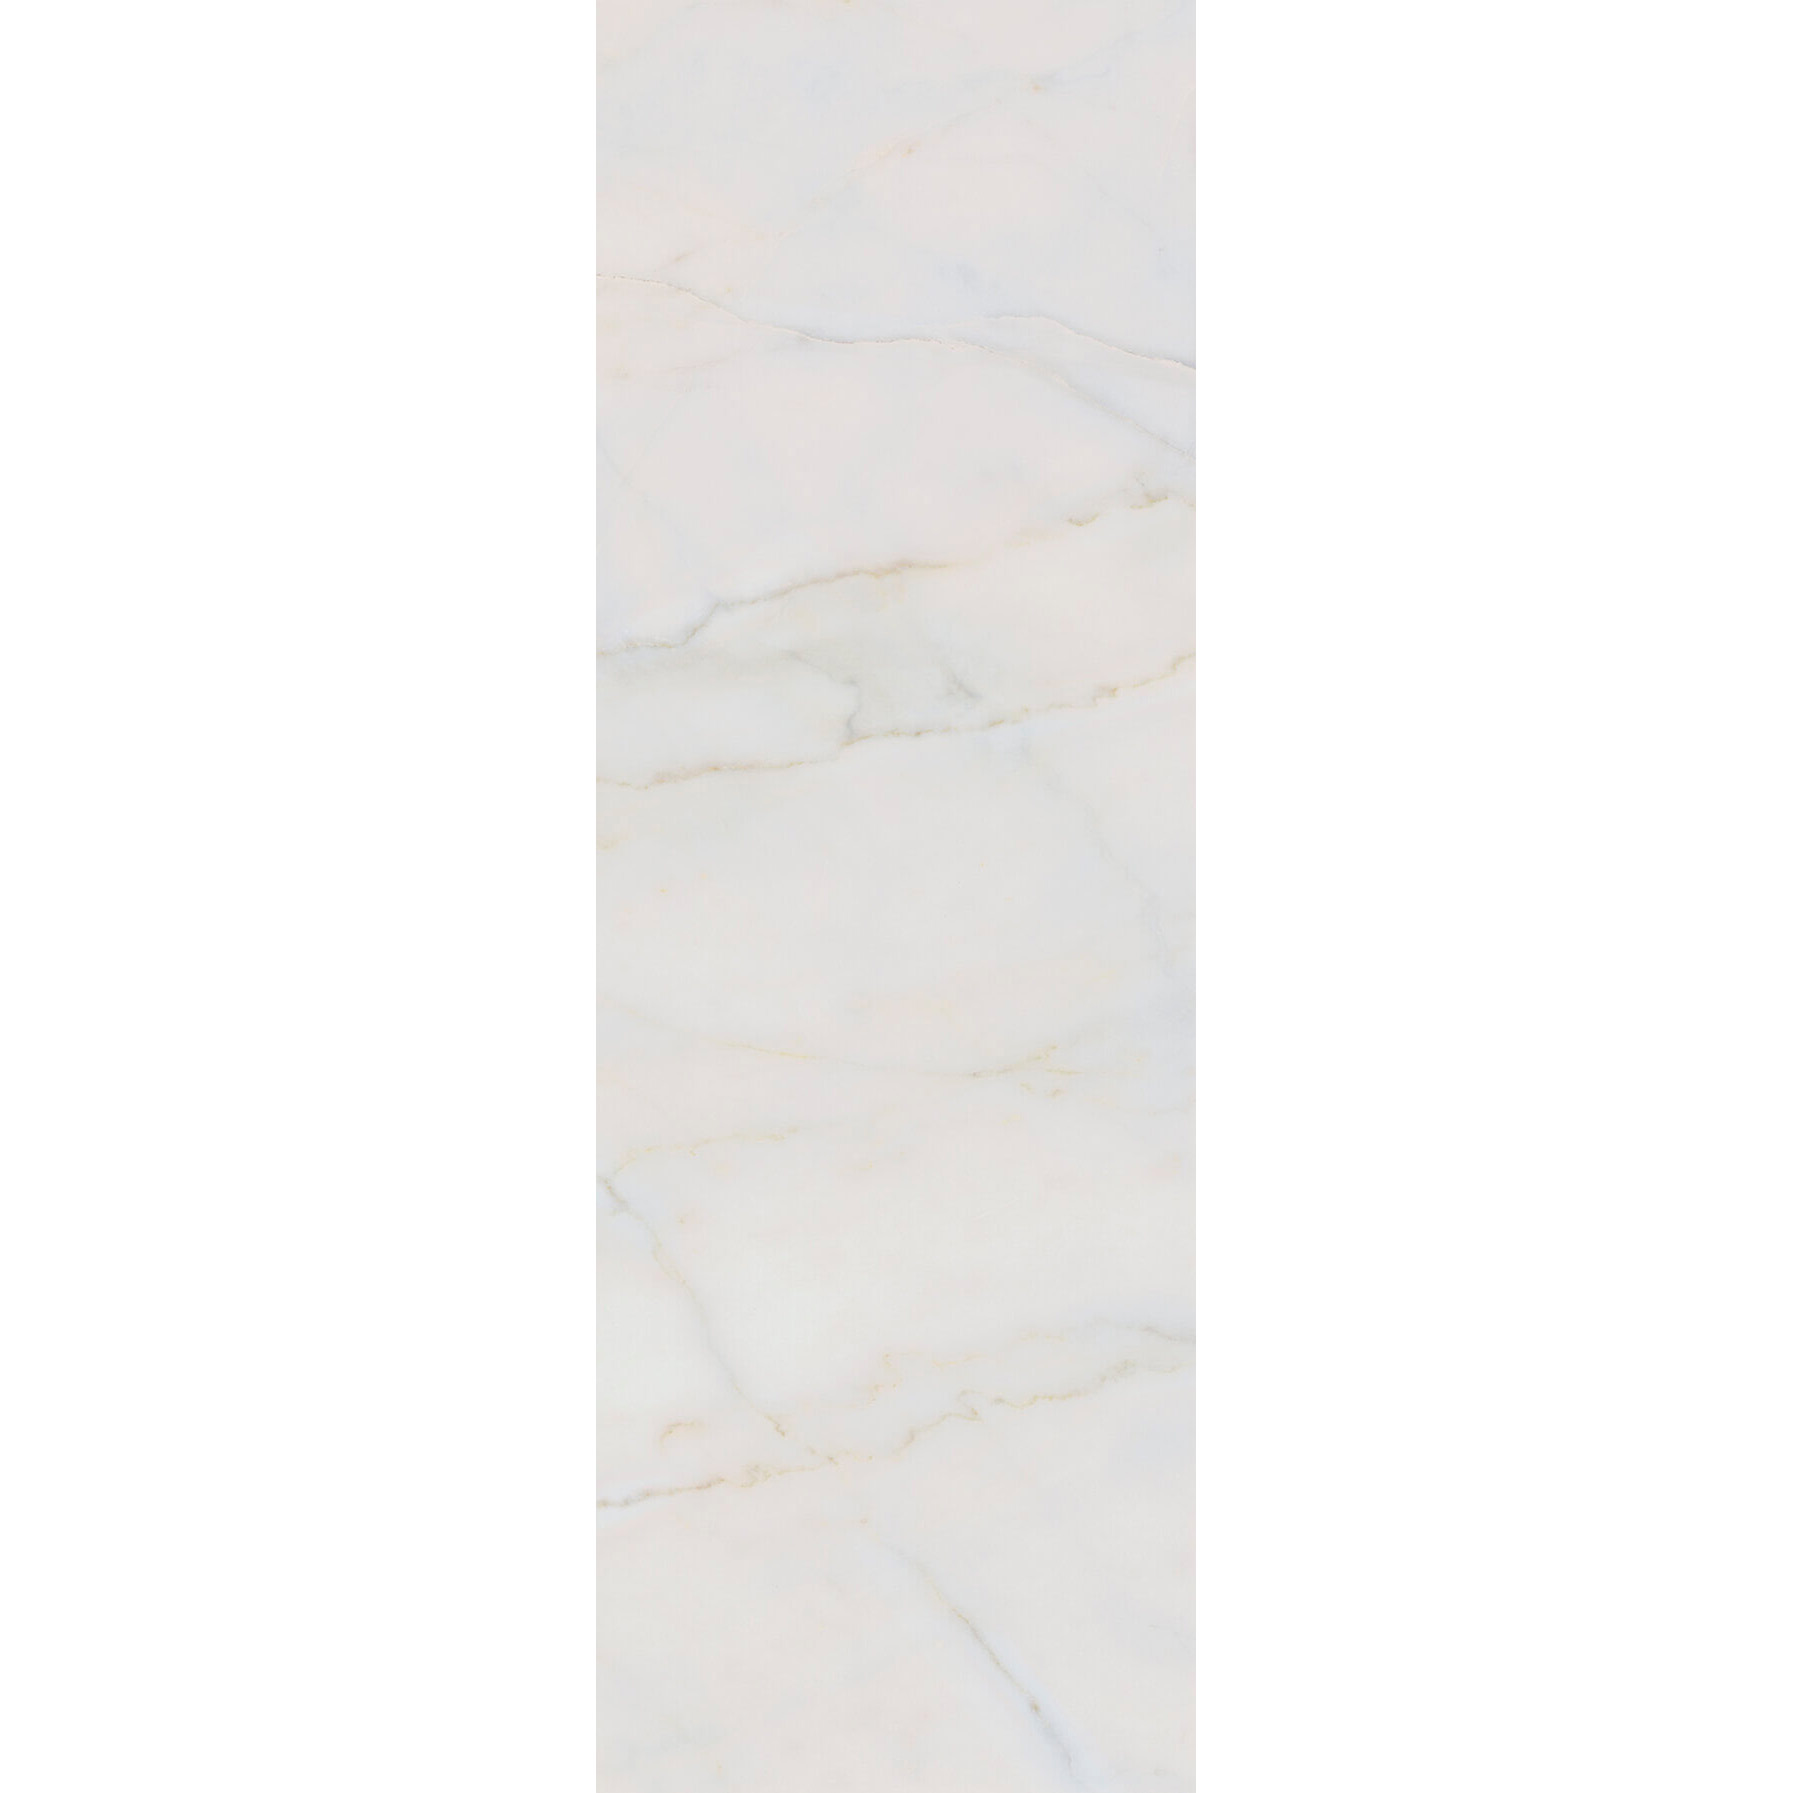 Плитка Kerama Marazzi Греппи белый обрезной 14003R 40x120 см